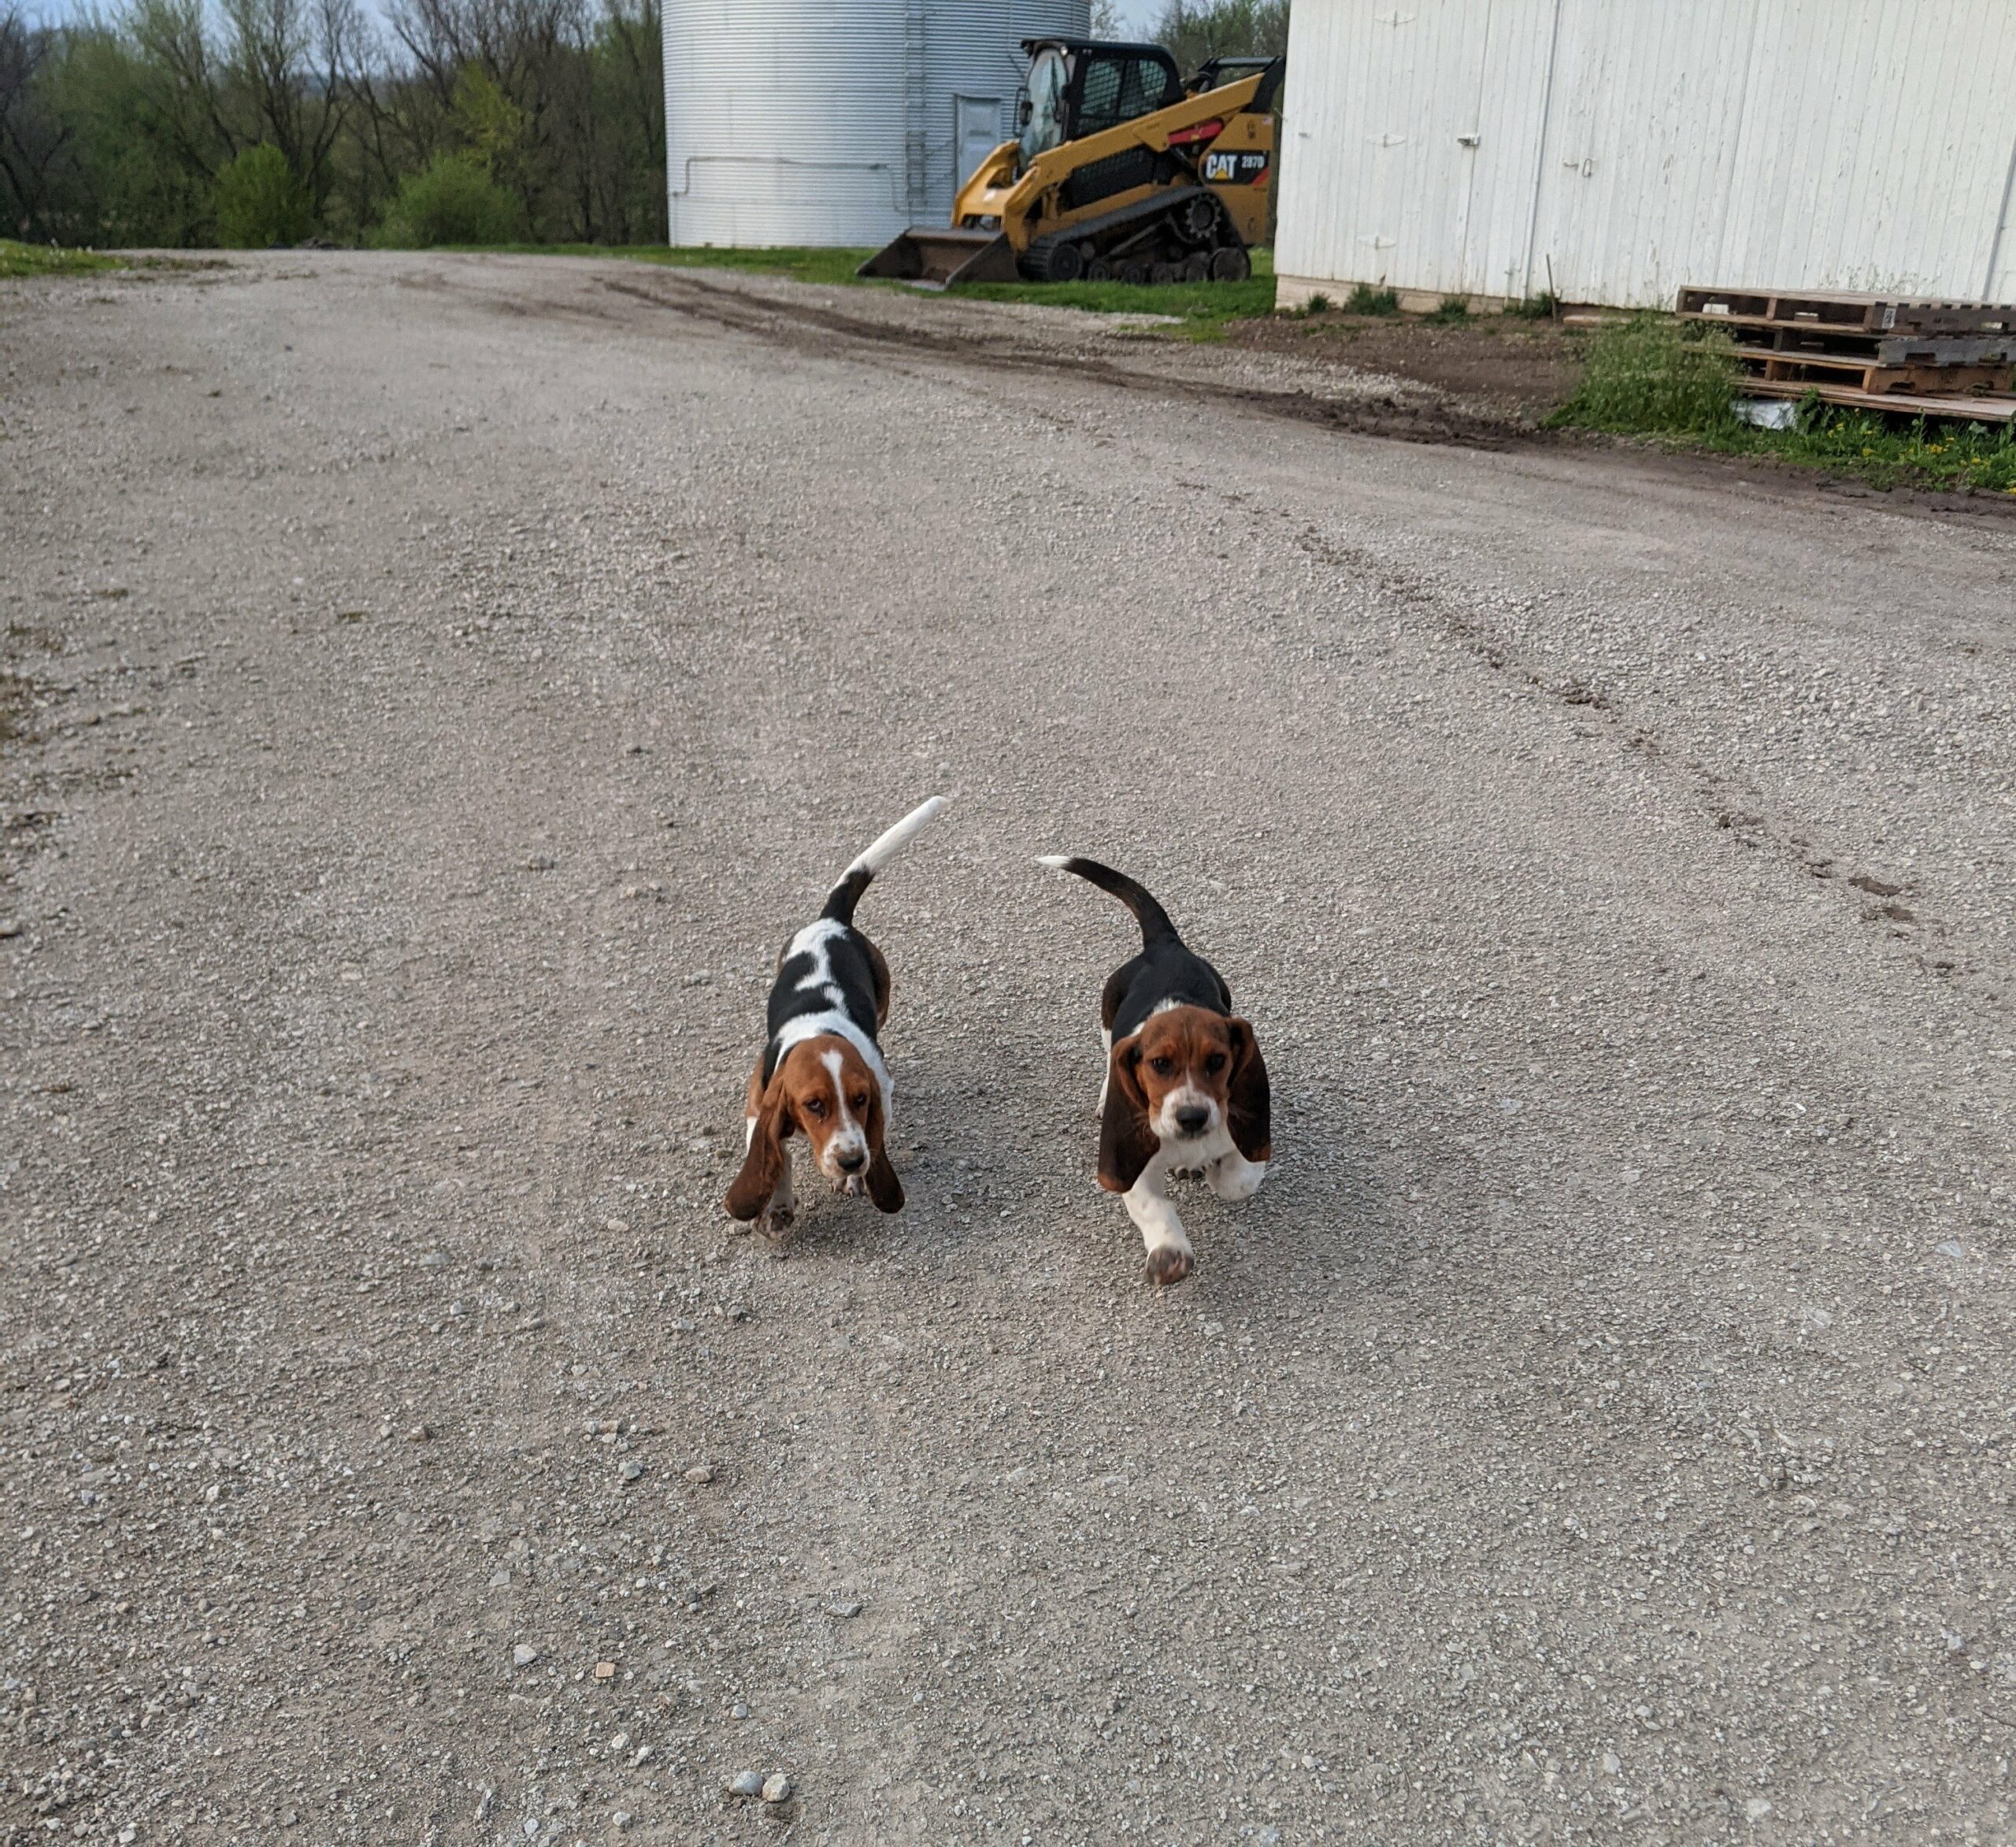 Two basset hounds walking down a gravel road near a grain bin and barn